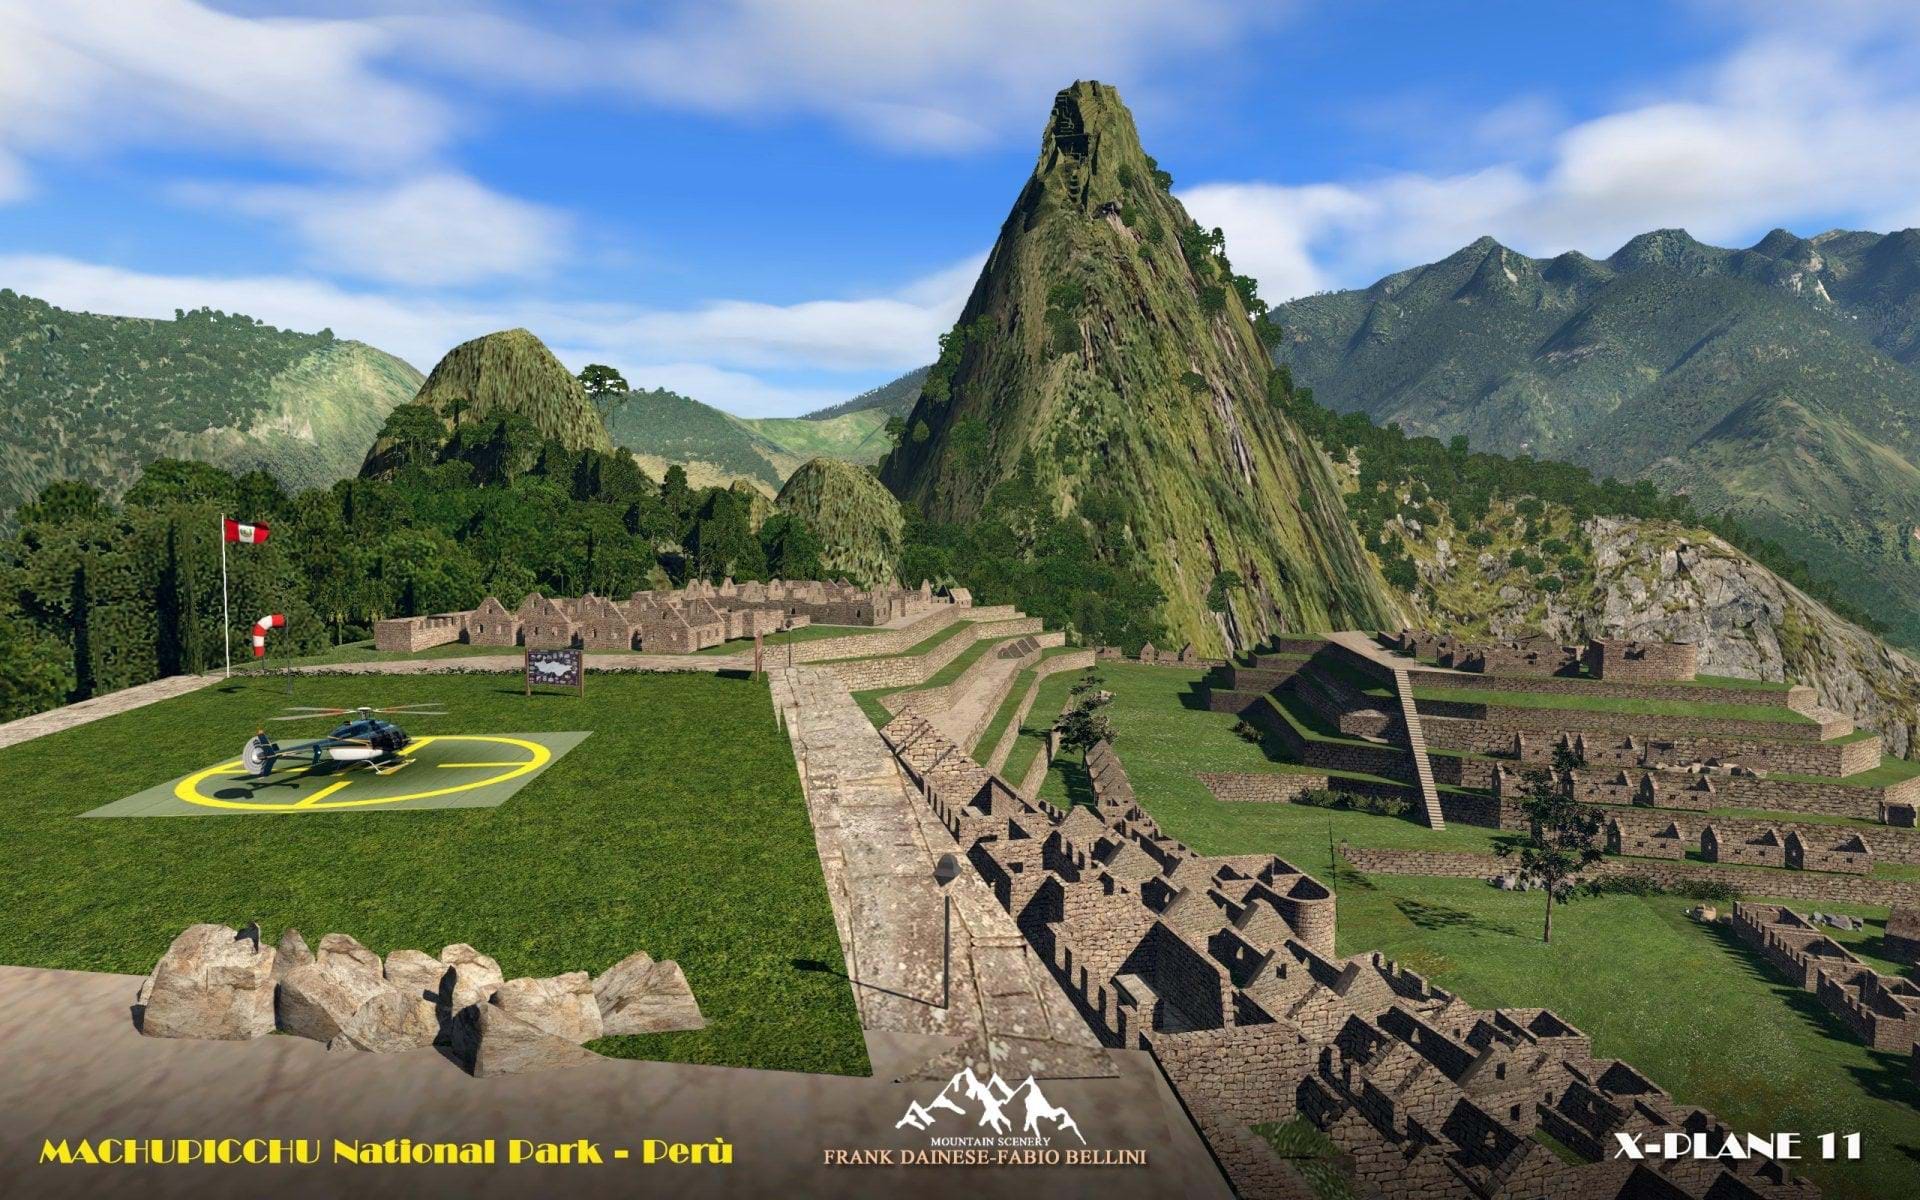 Frank Dainese and Fabio Bellini announce Machu Picchu for X-Plane